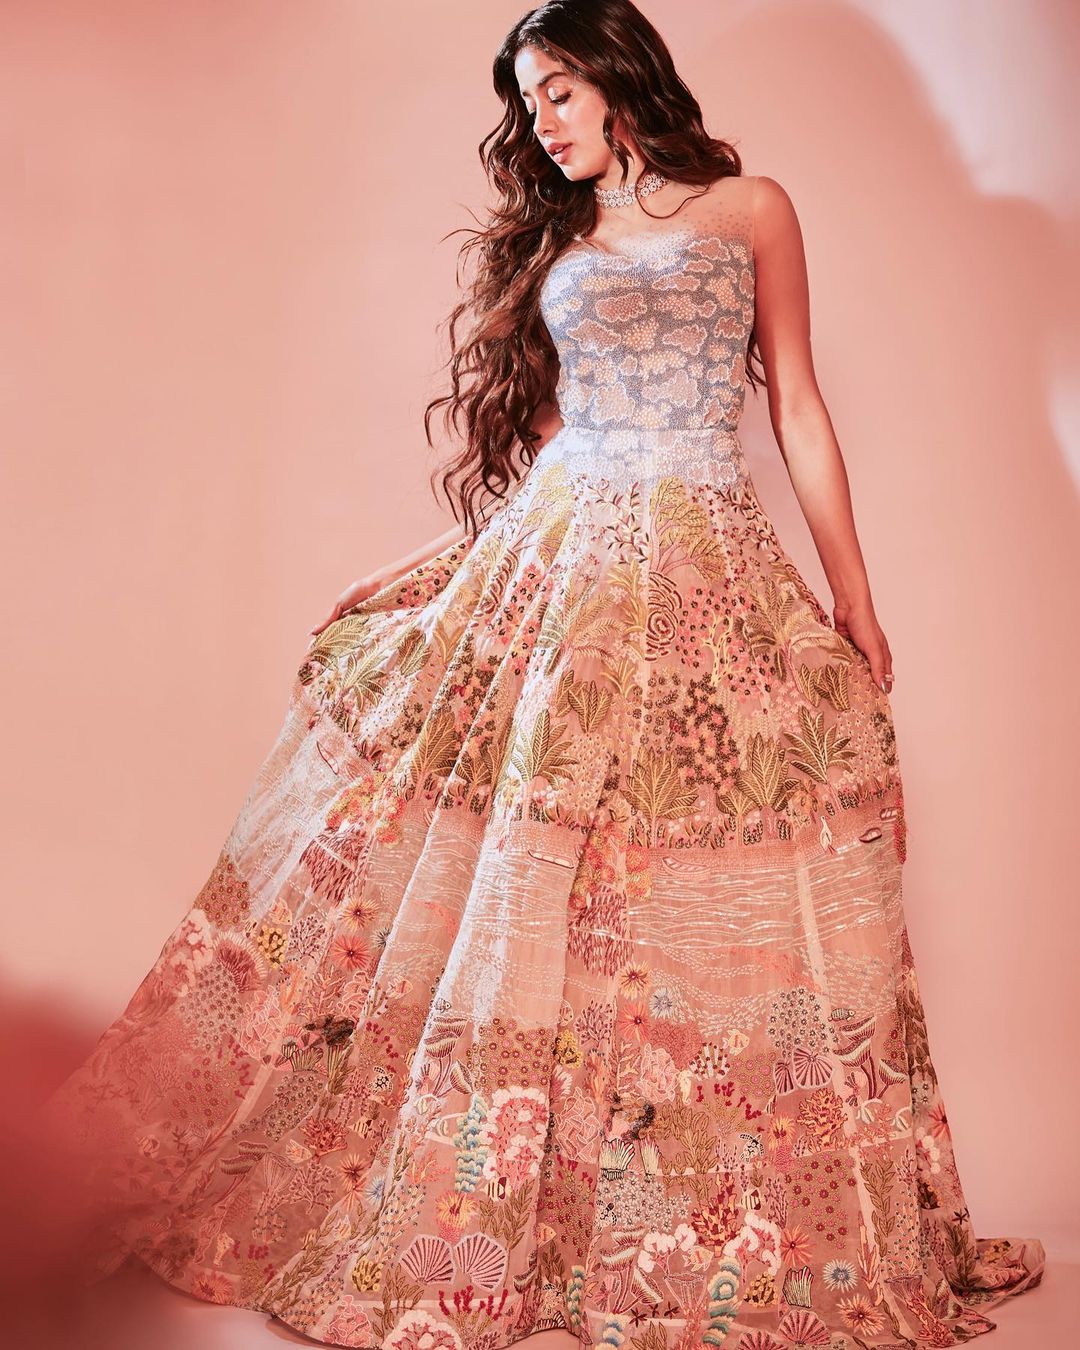 Janhvi Kapoor looks beautiful in the printed gown.